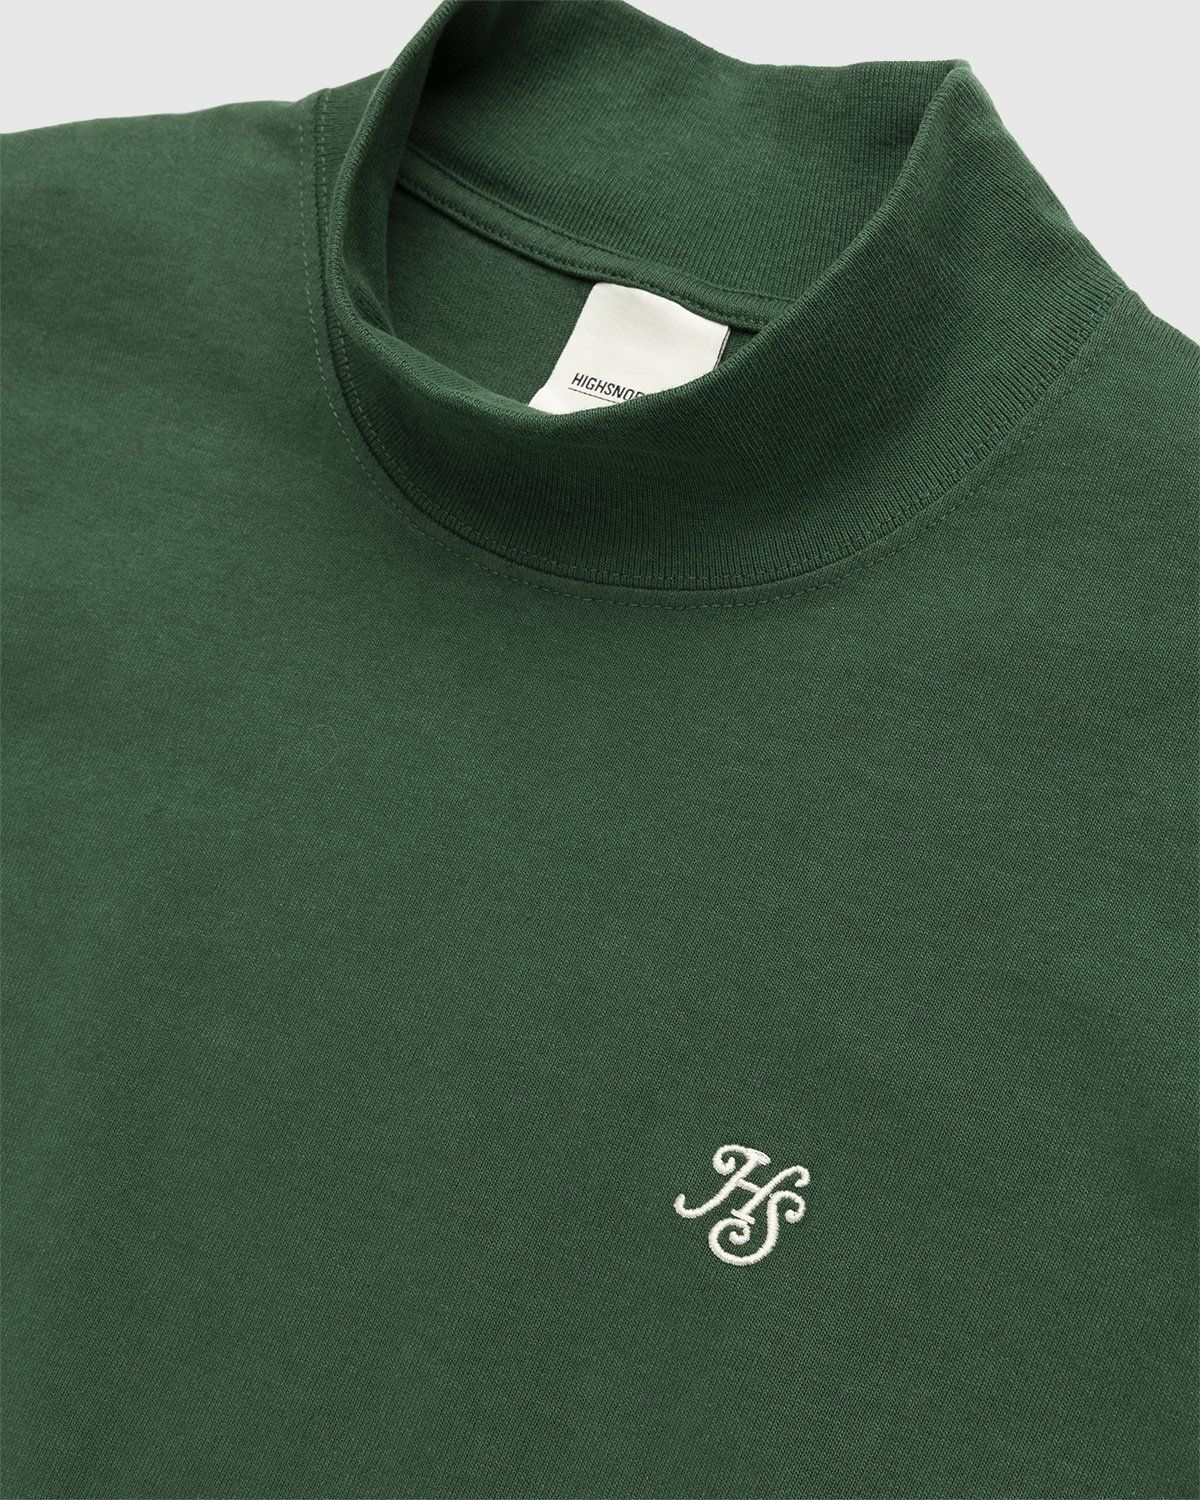 Highsnobiety – Heavy Logo Staples Mock Neck Campus Green - Tops - Green - Image 3